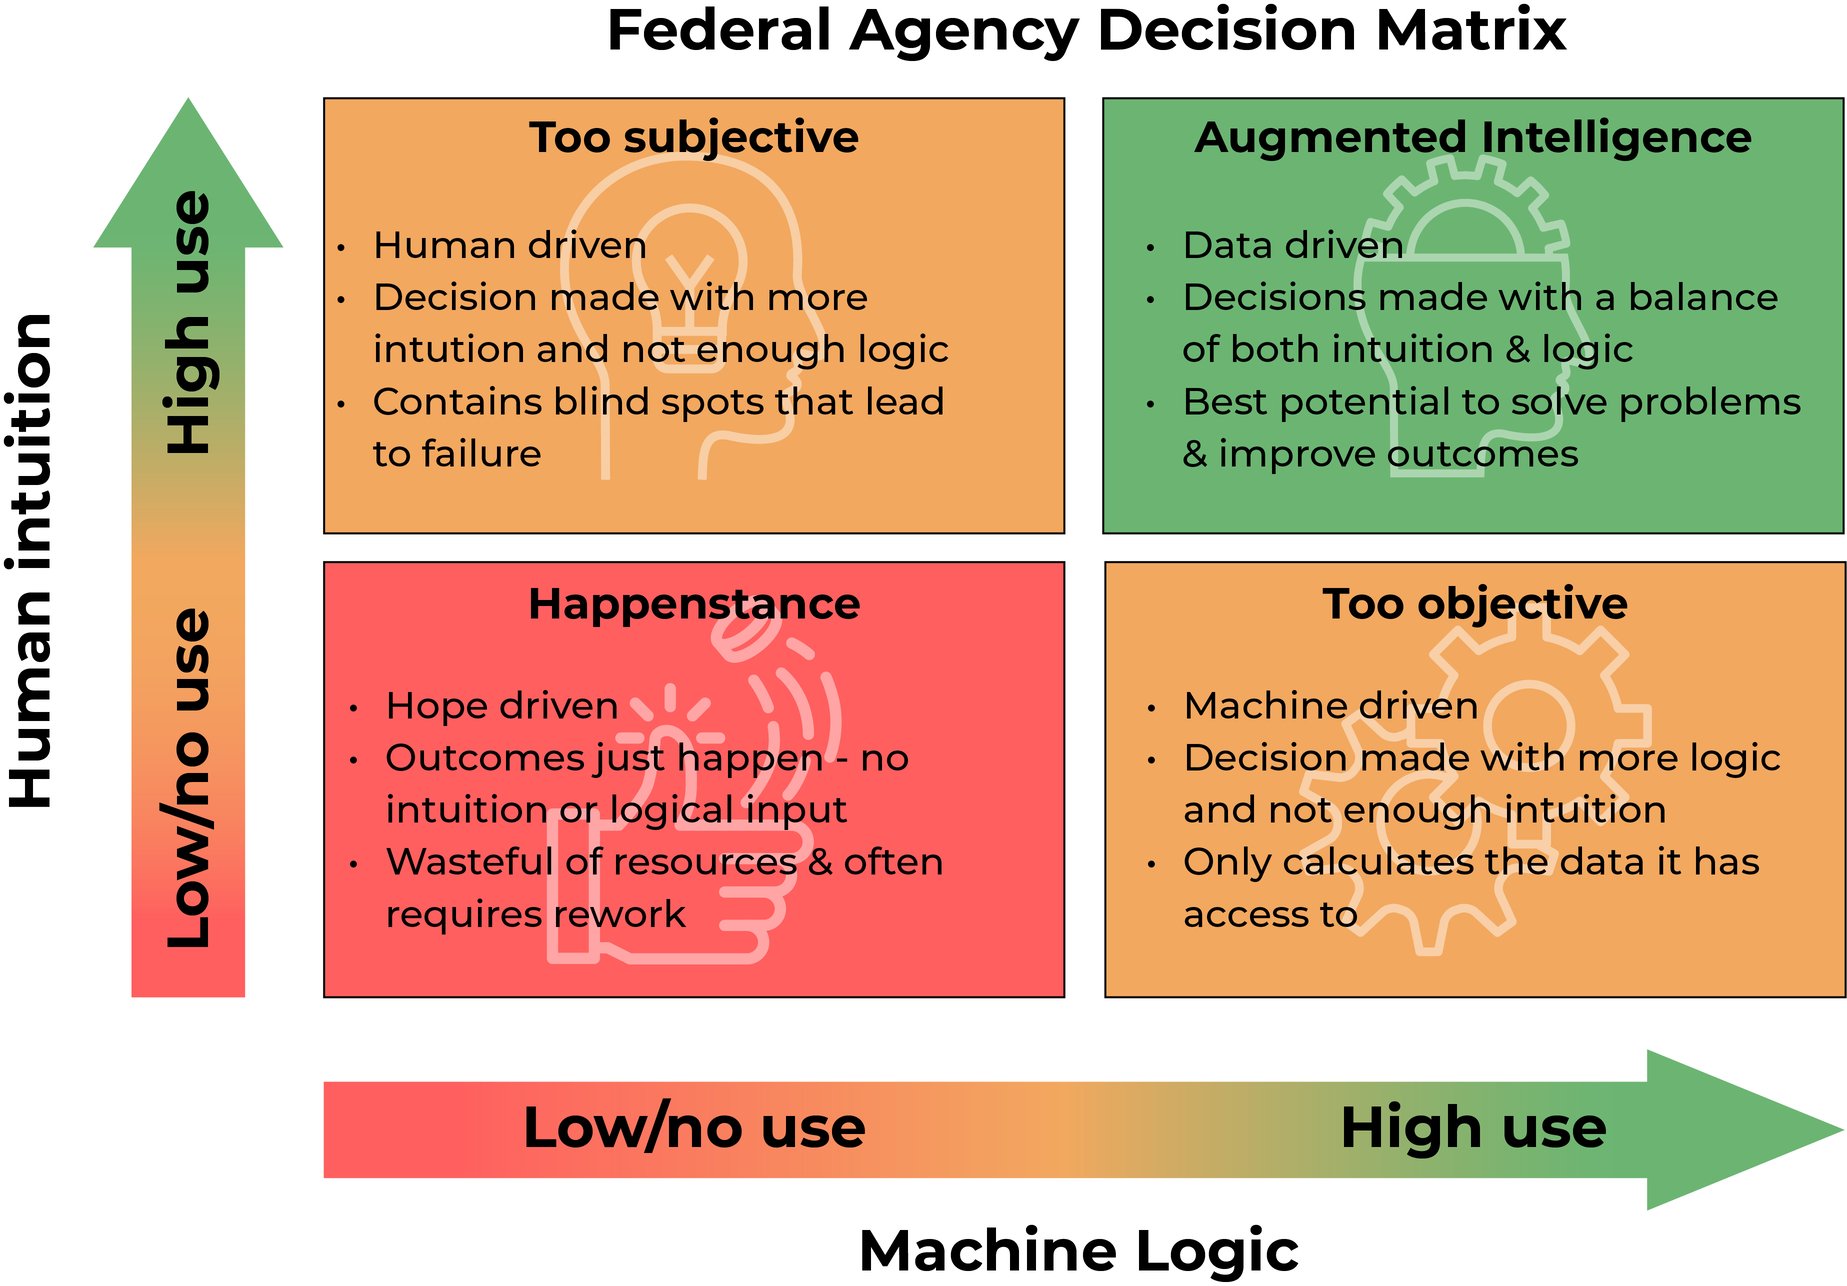 A 4x4 matrix to help federal agencies make data based decisions 